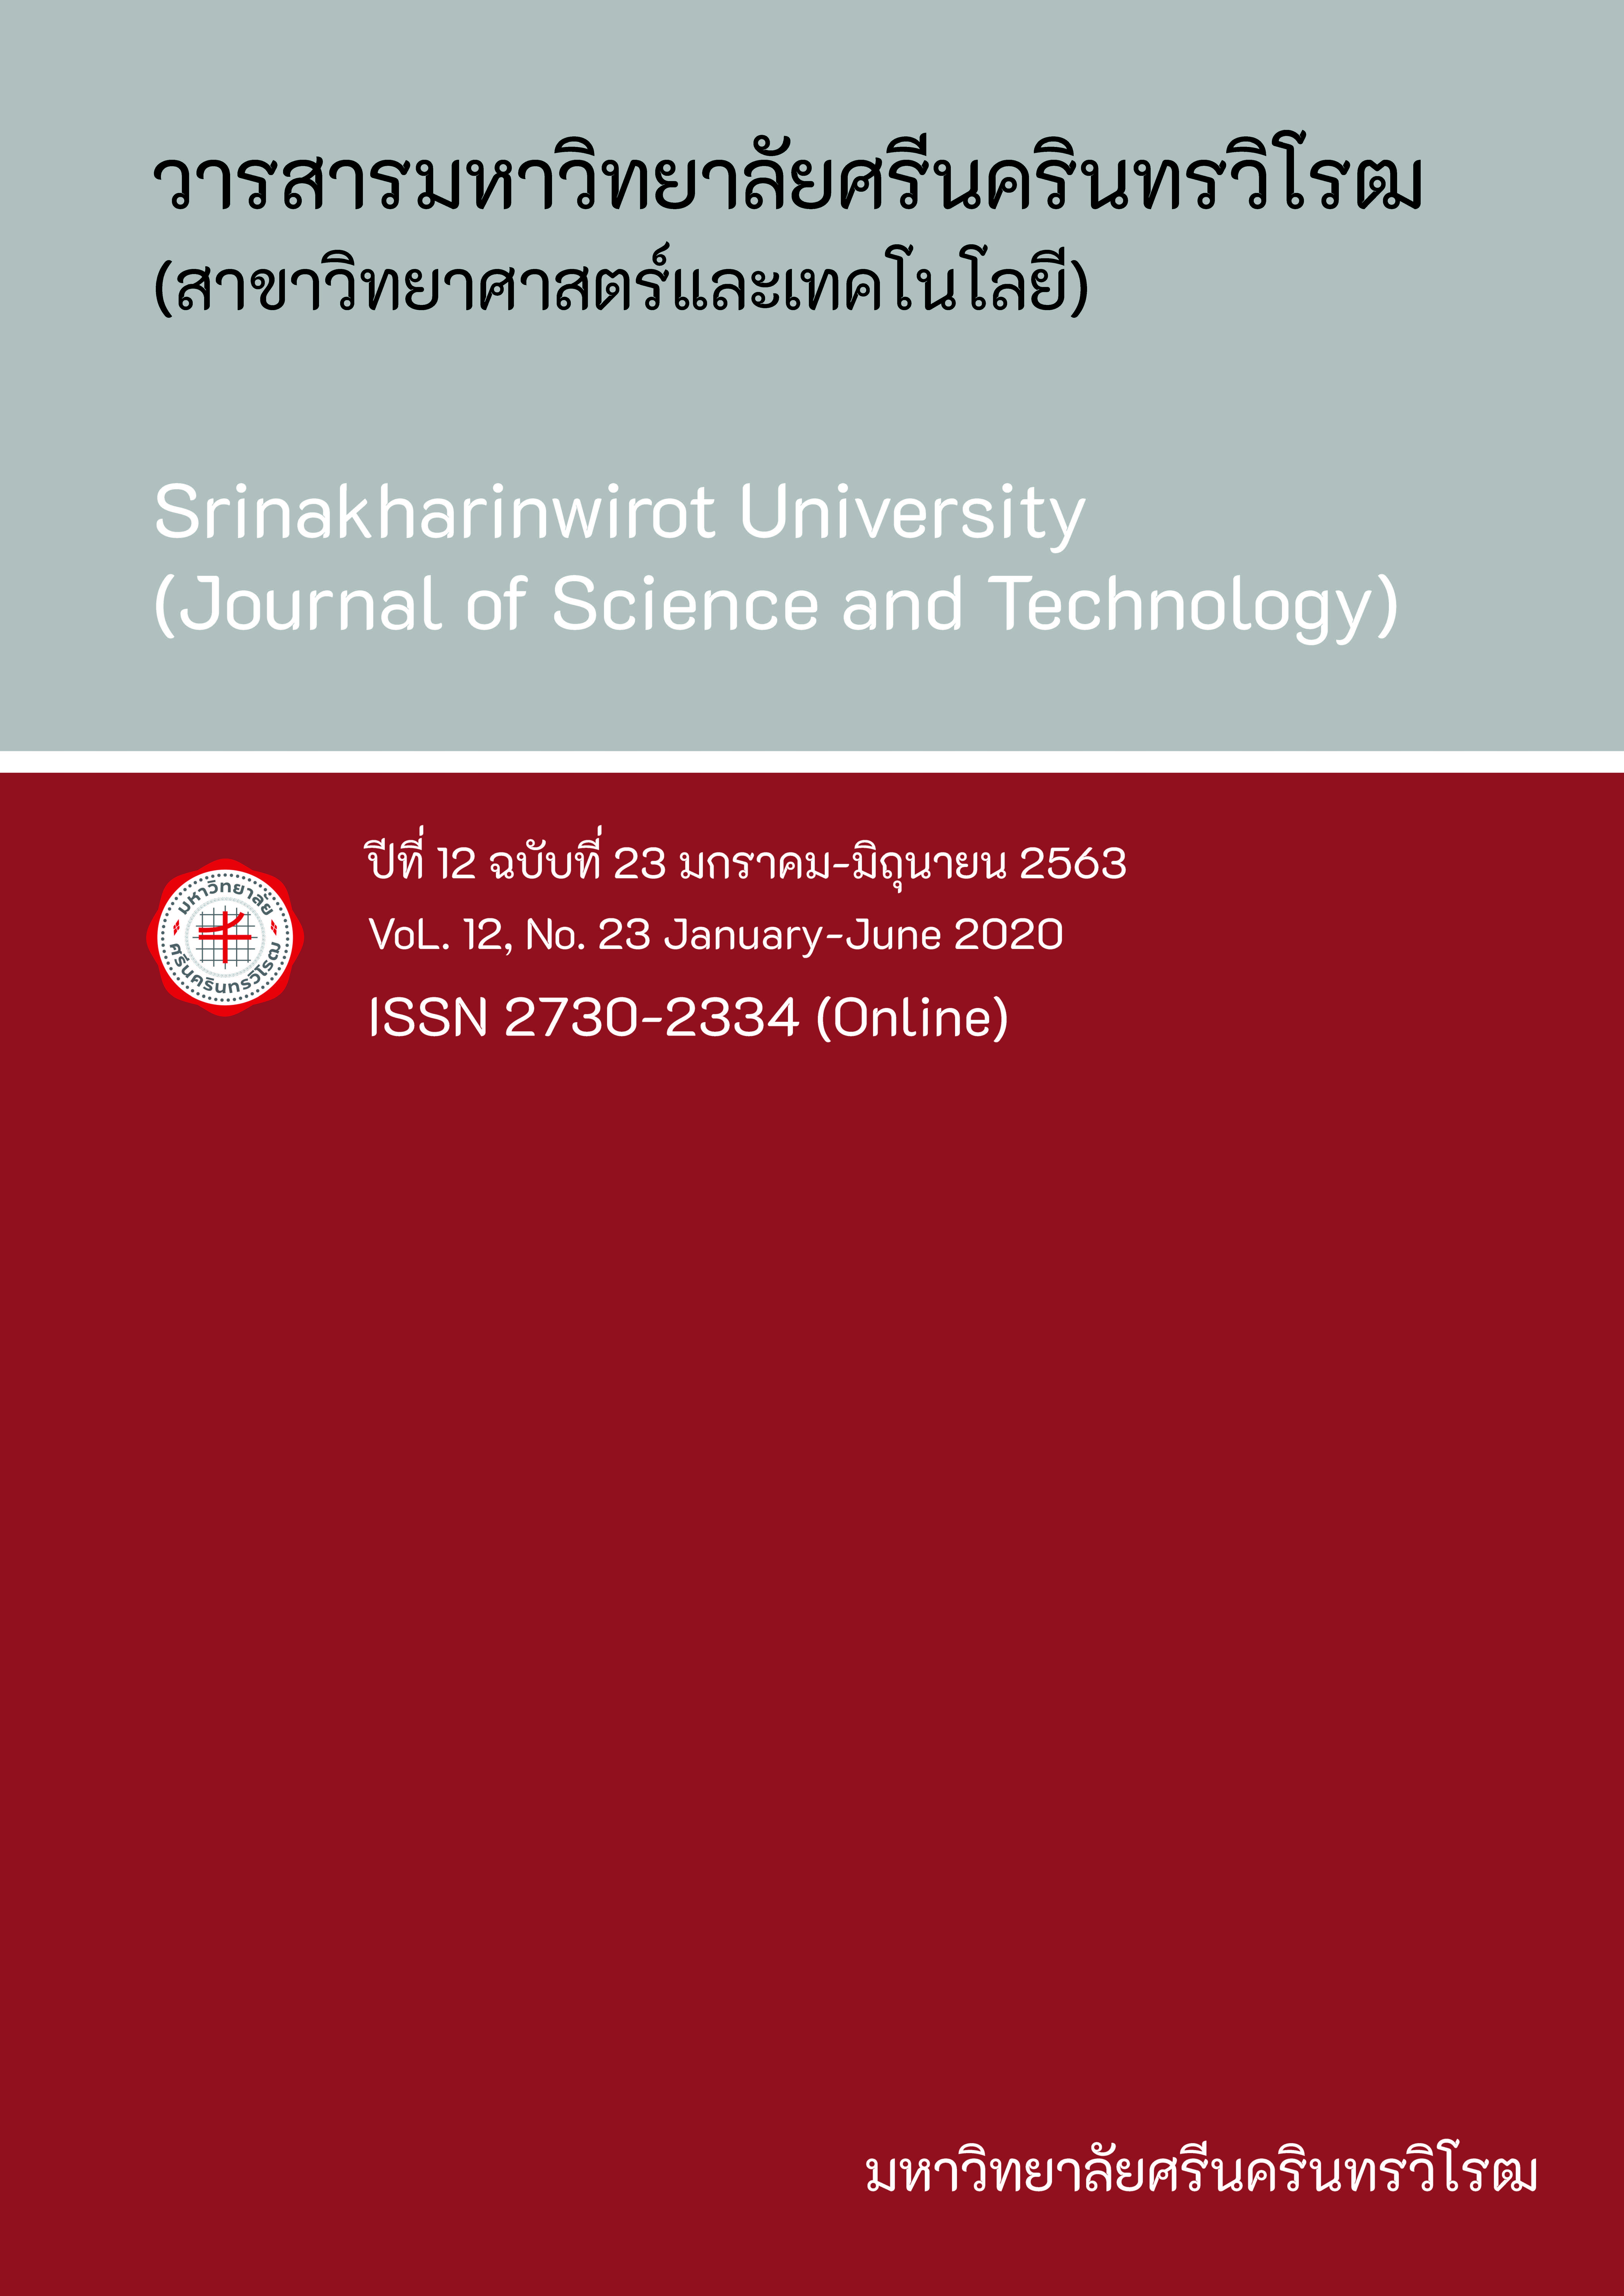 					View Vol. 12 No. 23, January-June (2020): Srinakharinwirot University (Journal of Science and Technology)
				